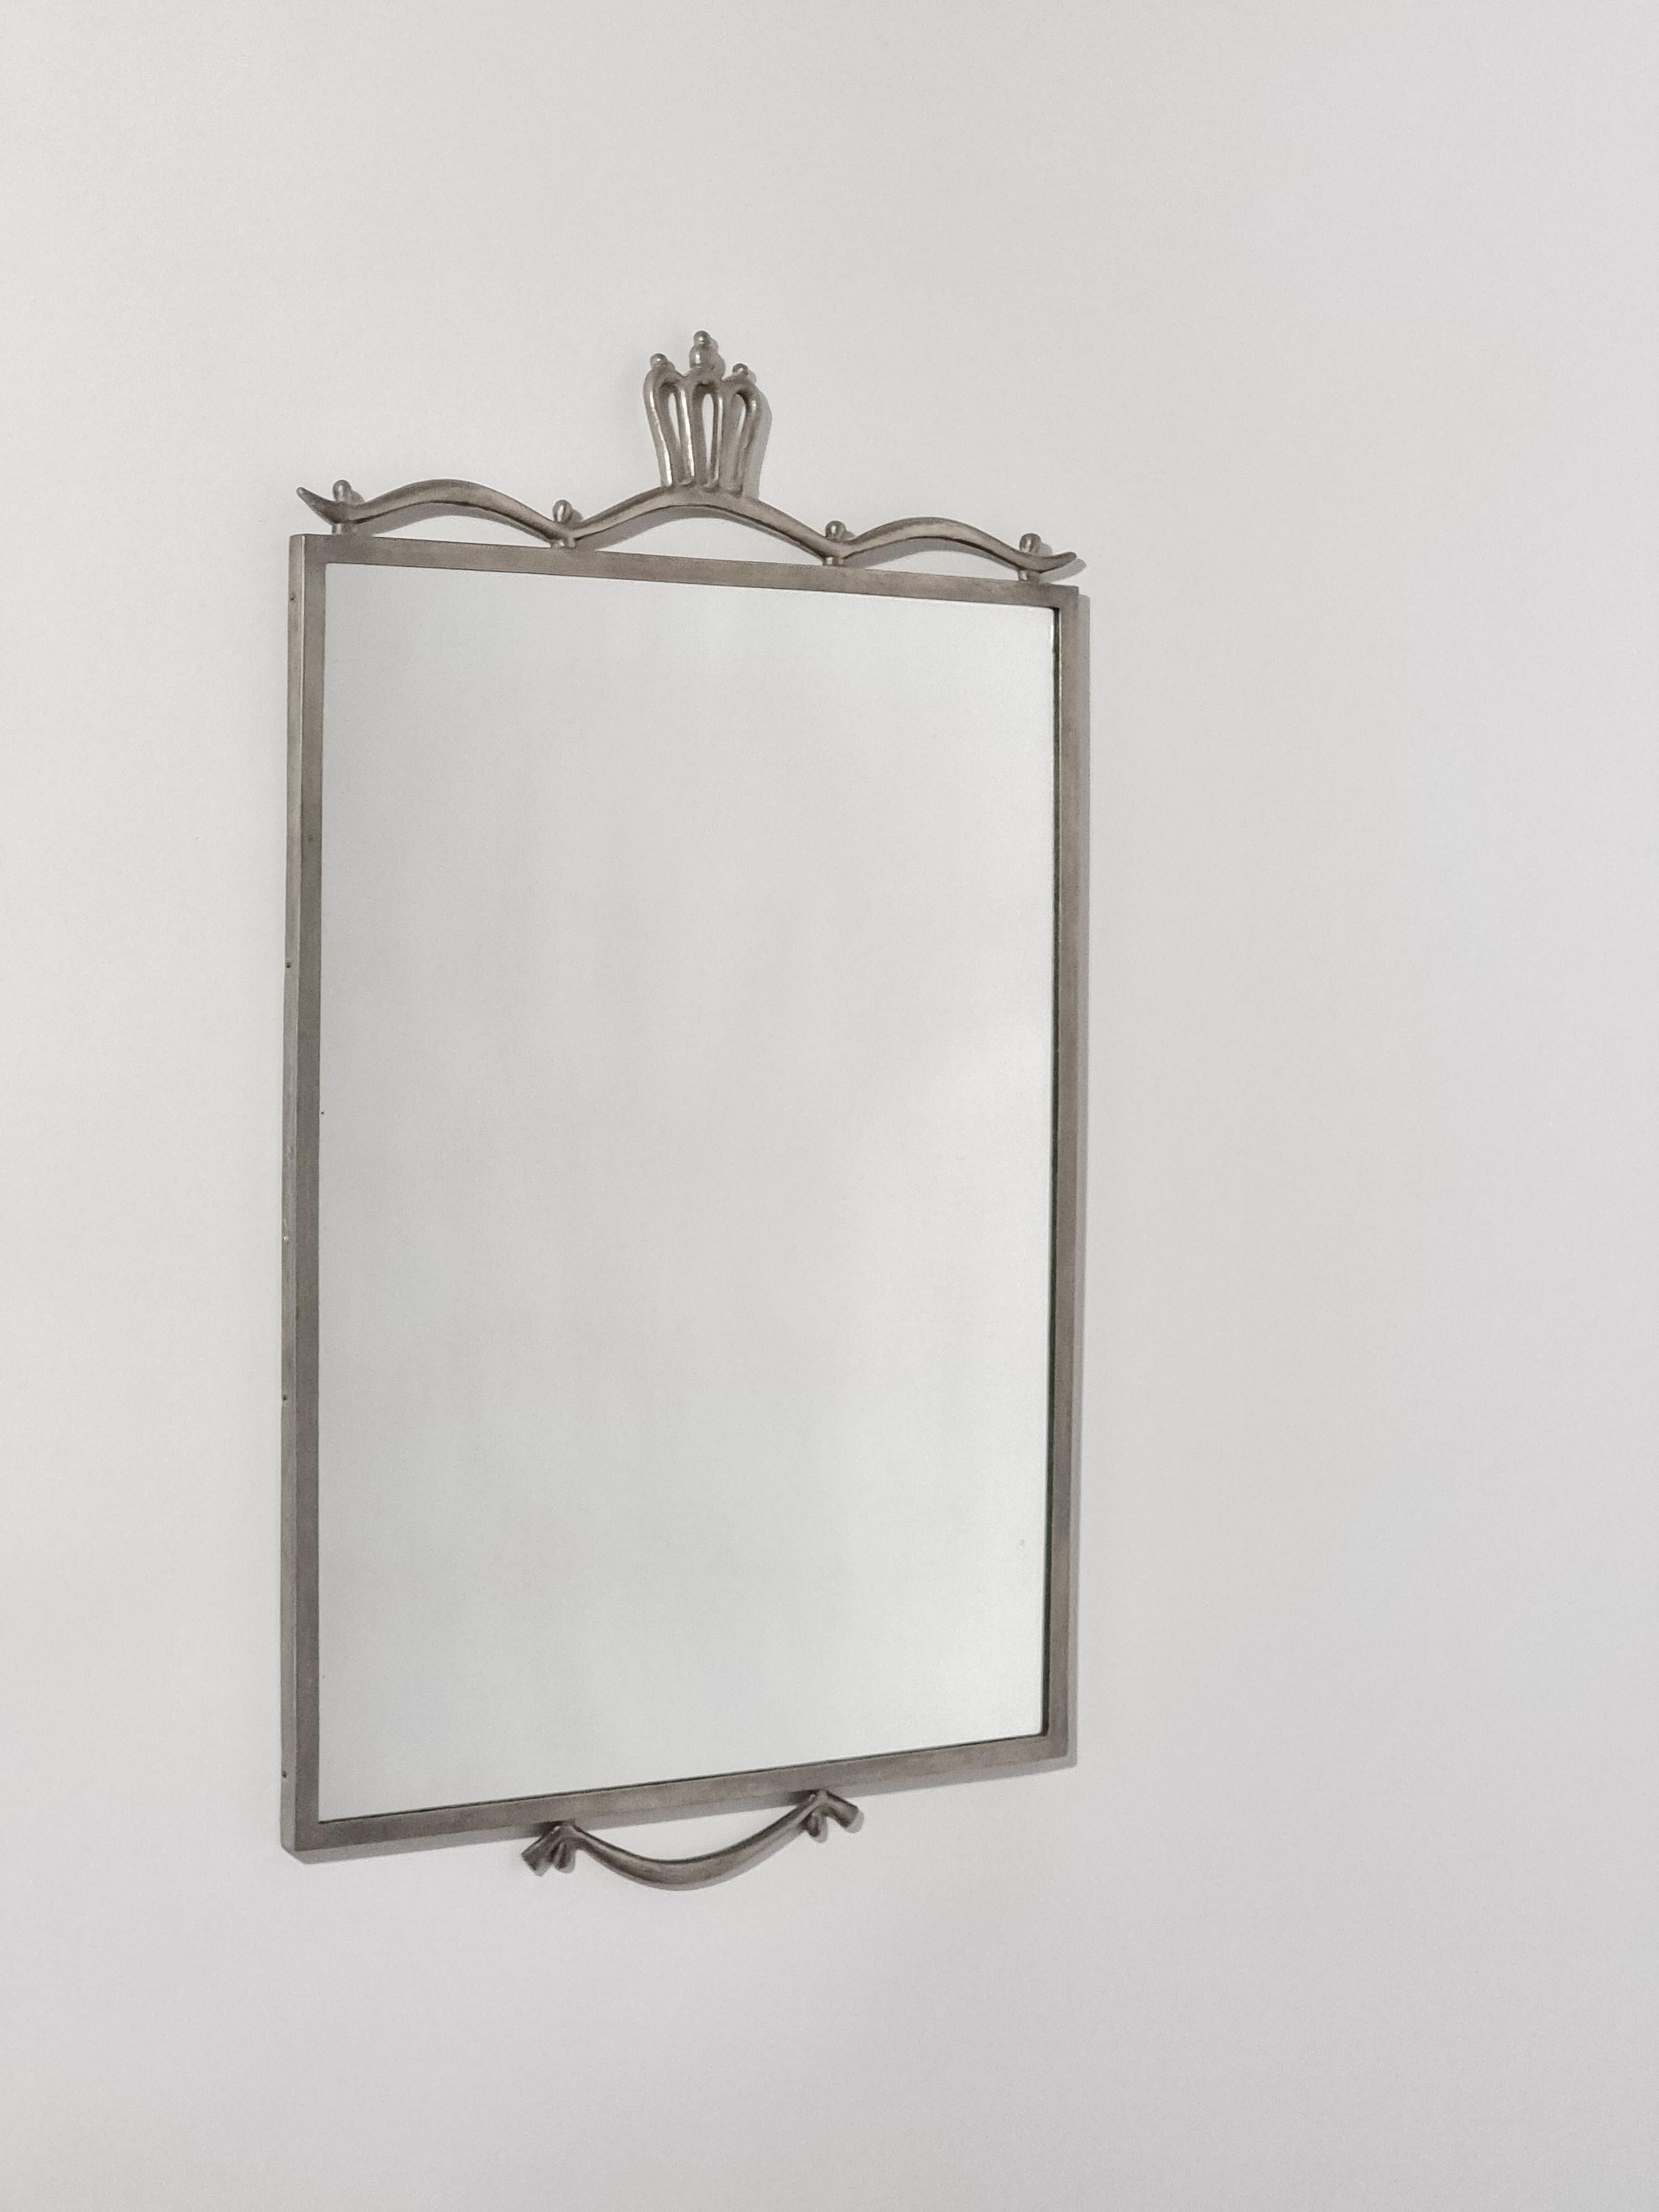 Scandinavian Modern Edvin Ollers, Mirror in Pewter, Swedish Grace, 1920s For Sale